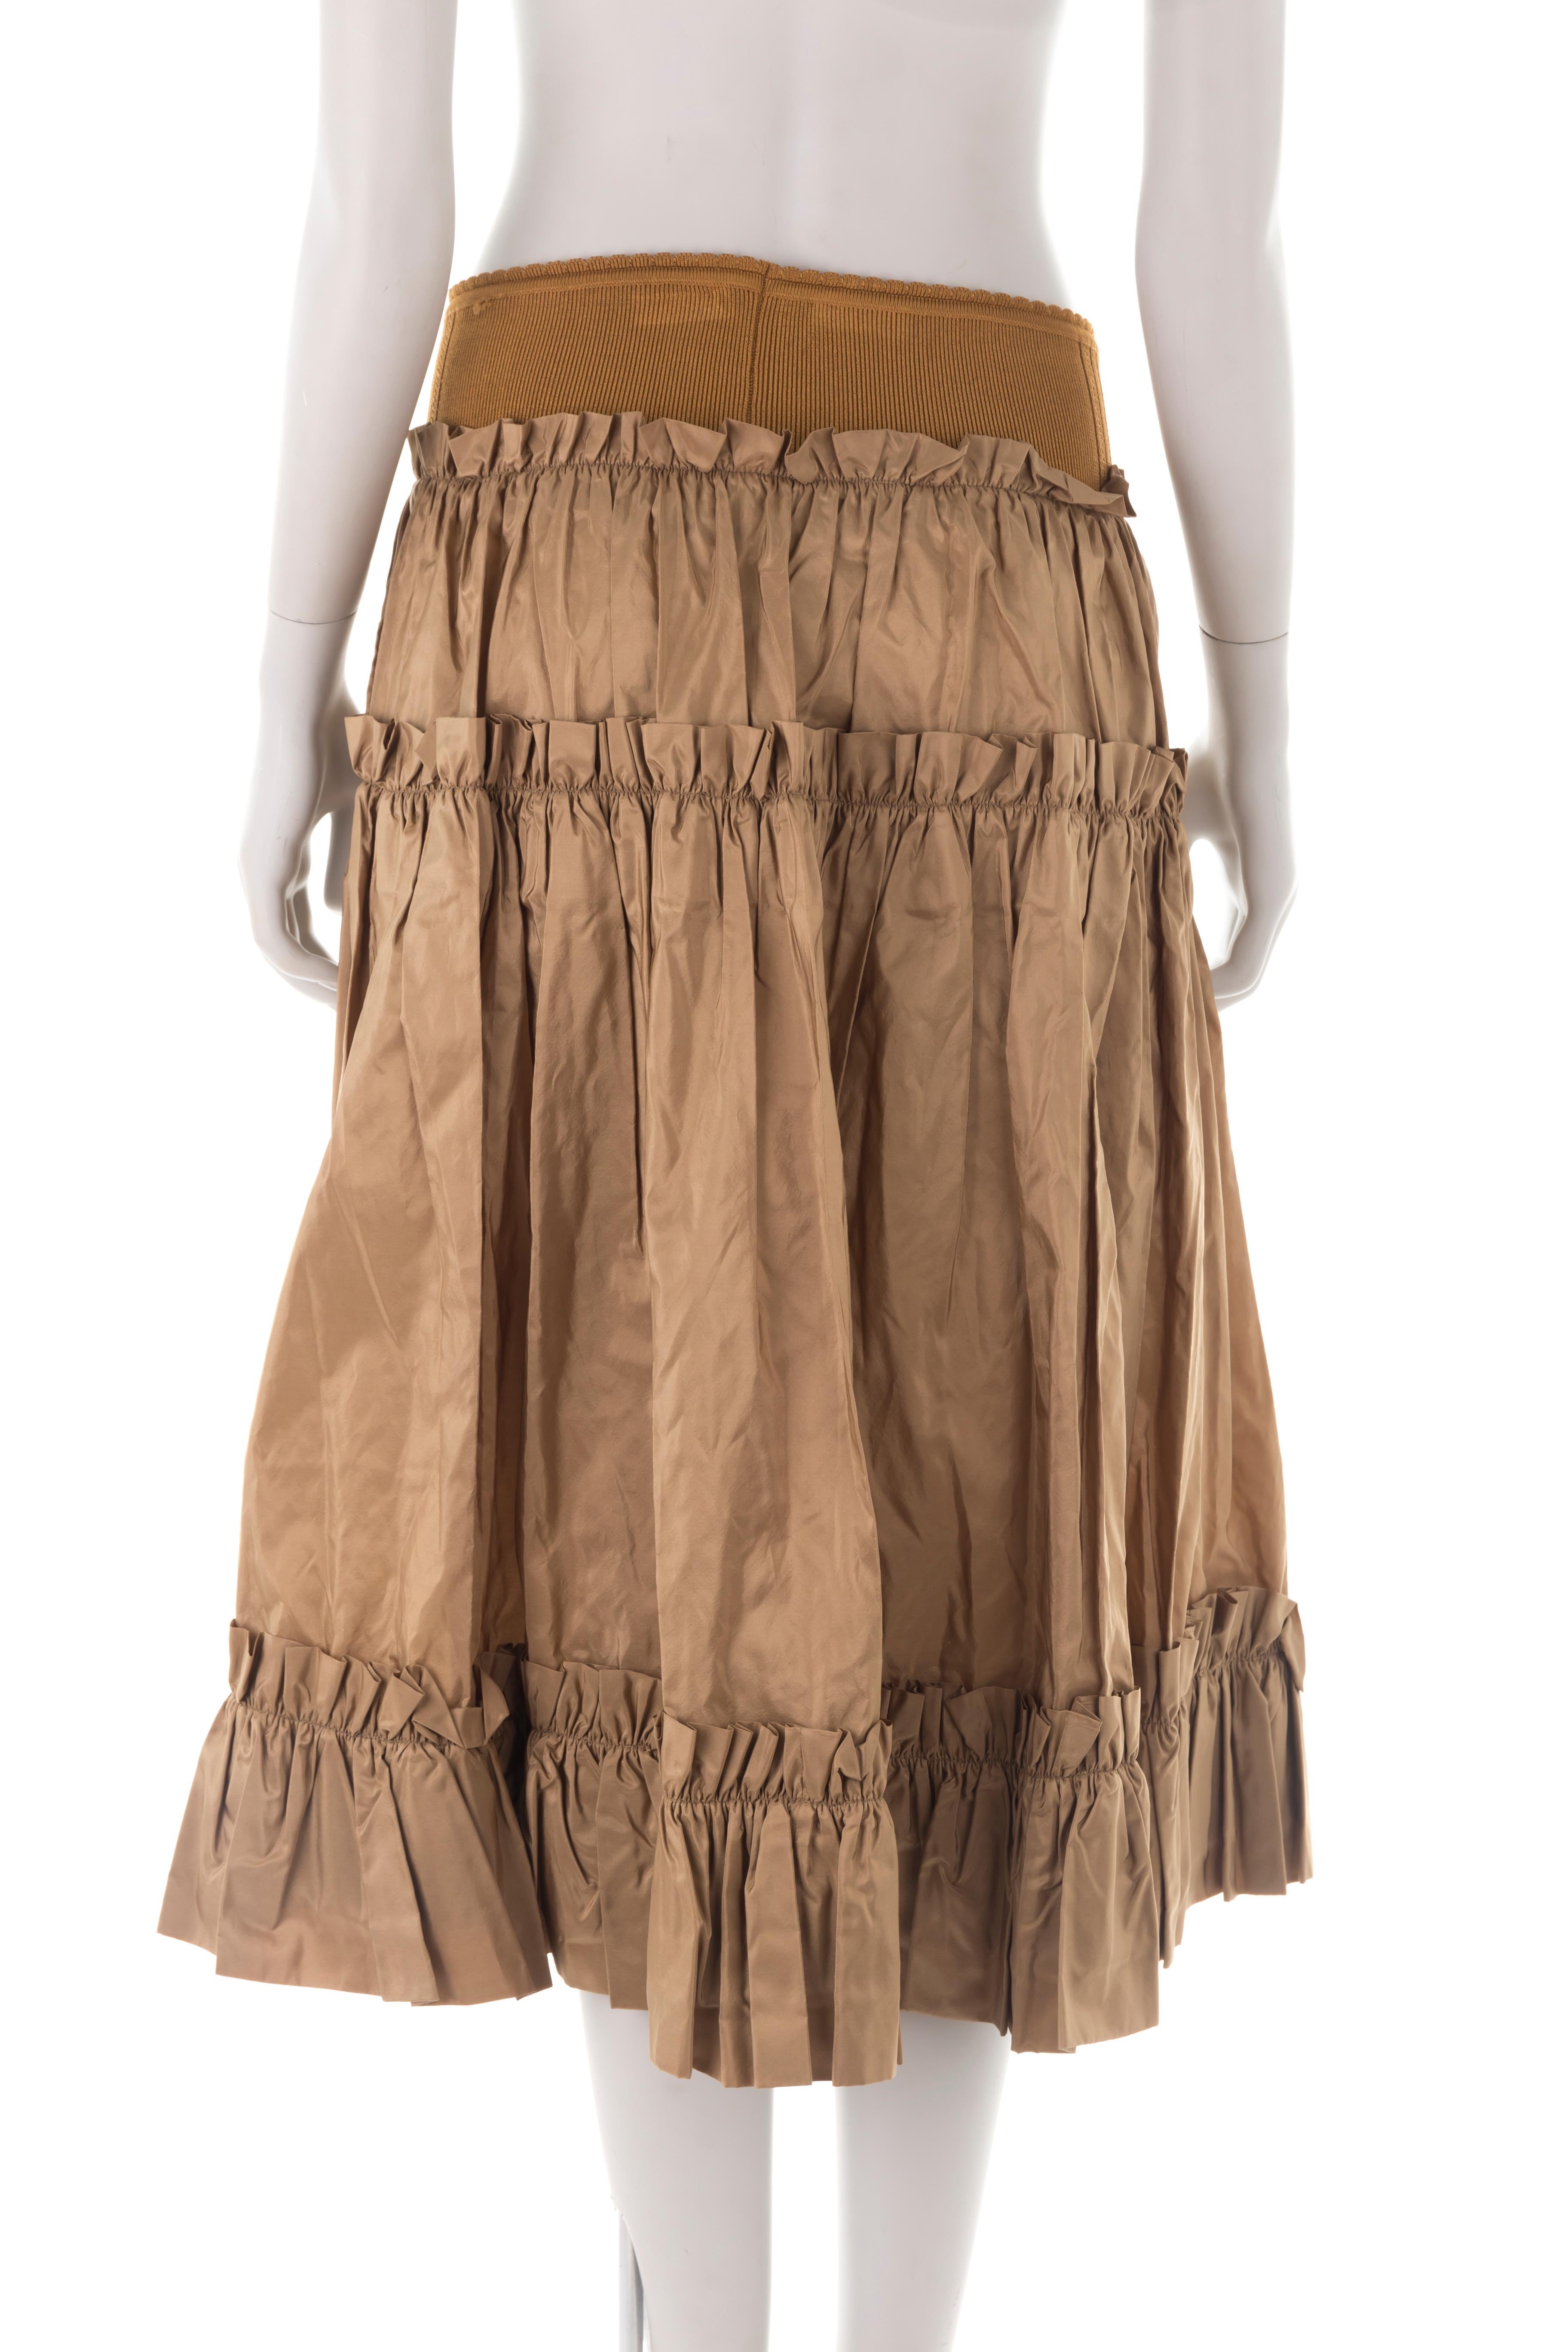 Roberto Cavalli S/S 2005 khaki boho maxi skirt In Fair Condition For Sale In Rome, IT